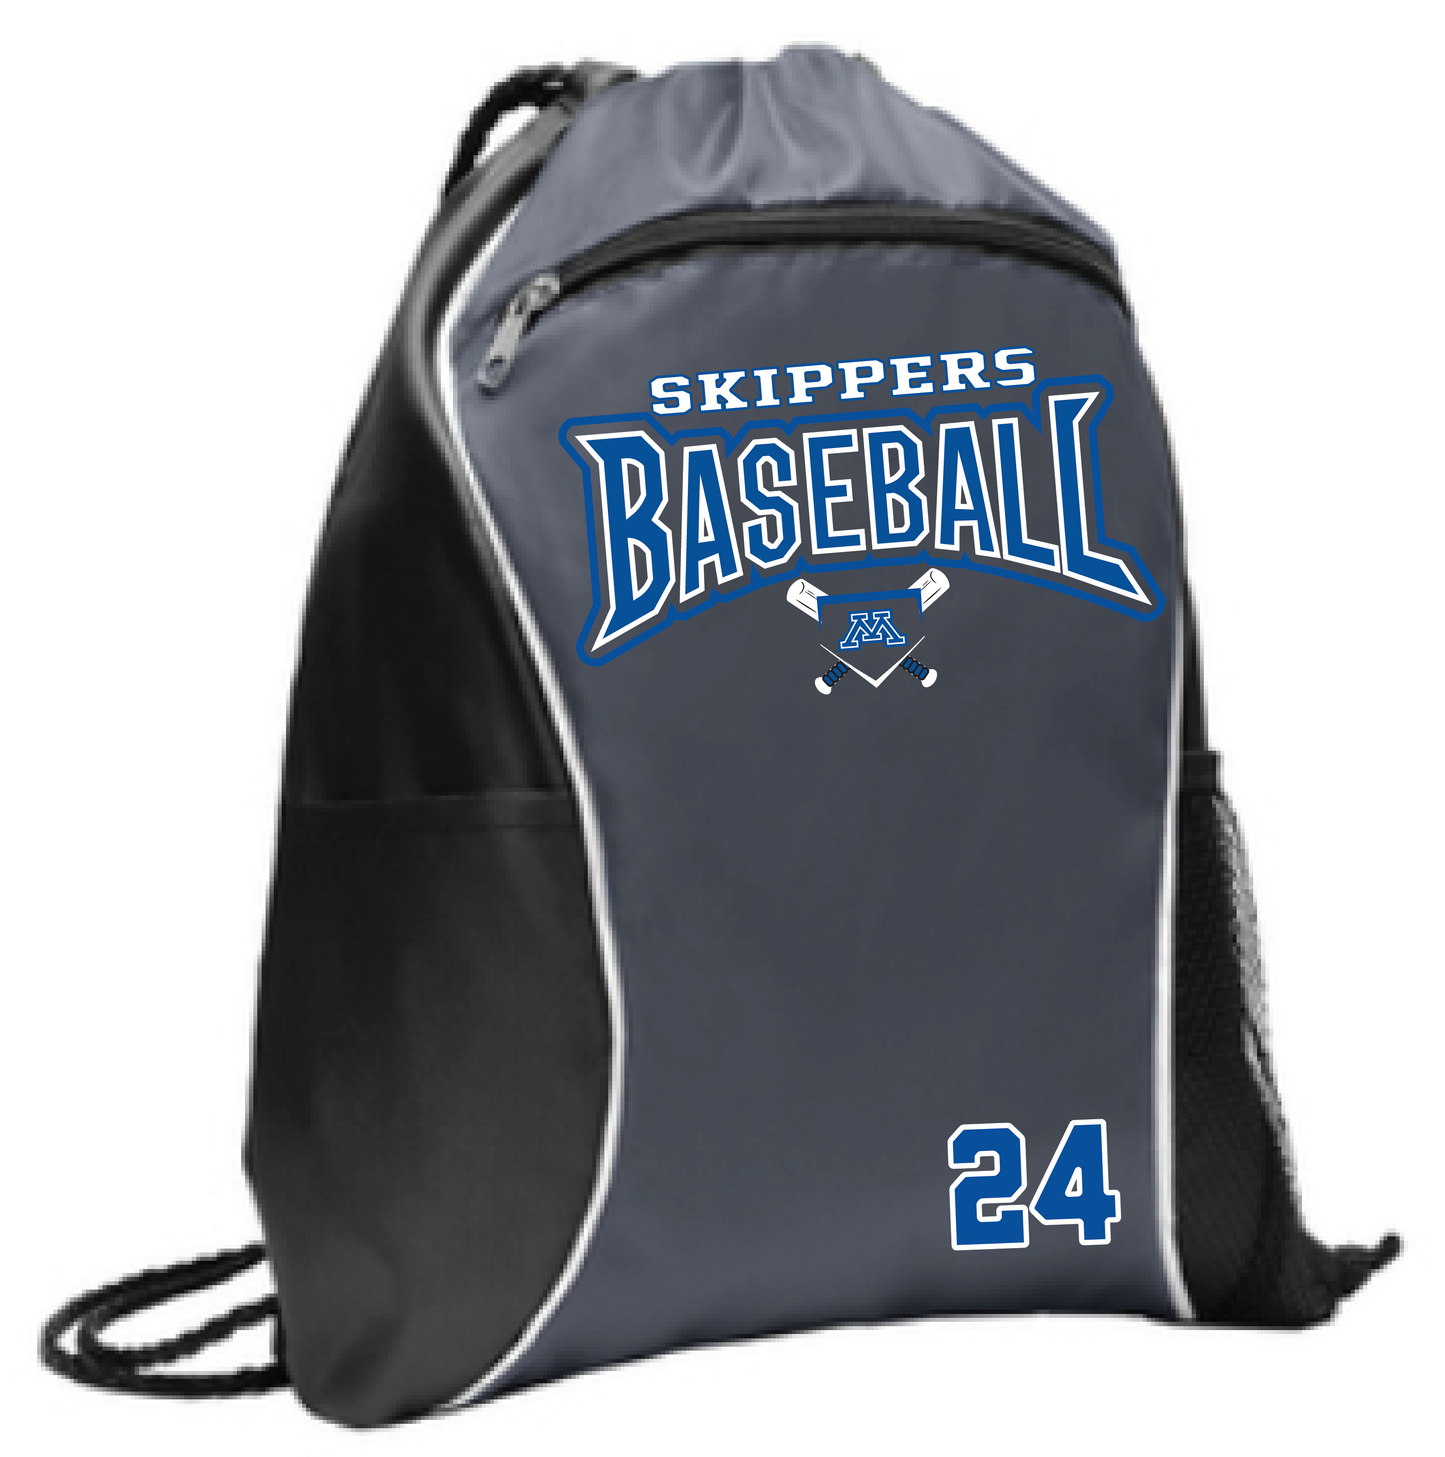 Baseball Drawstring Bag With Side Pockets